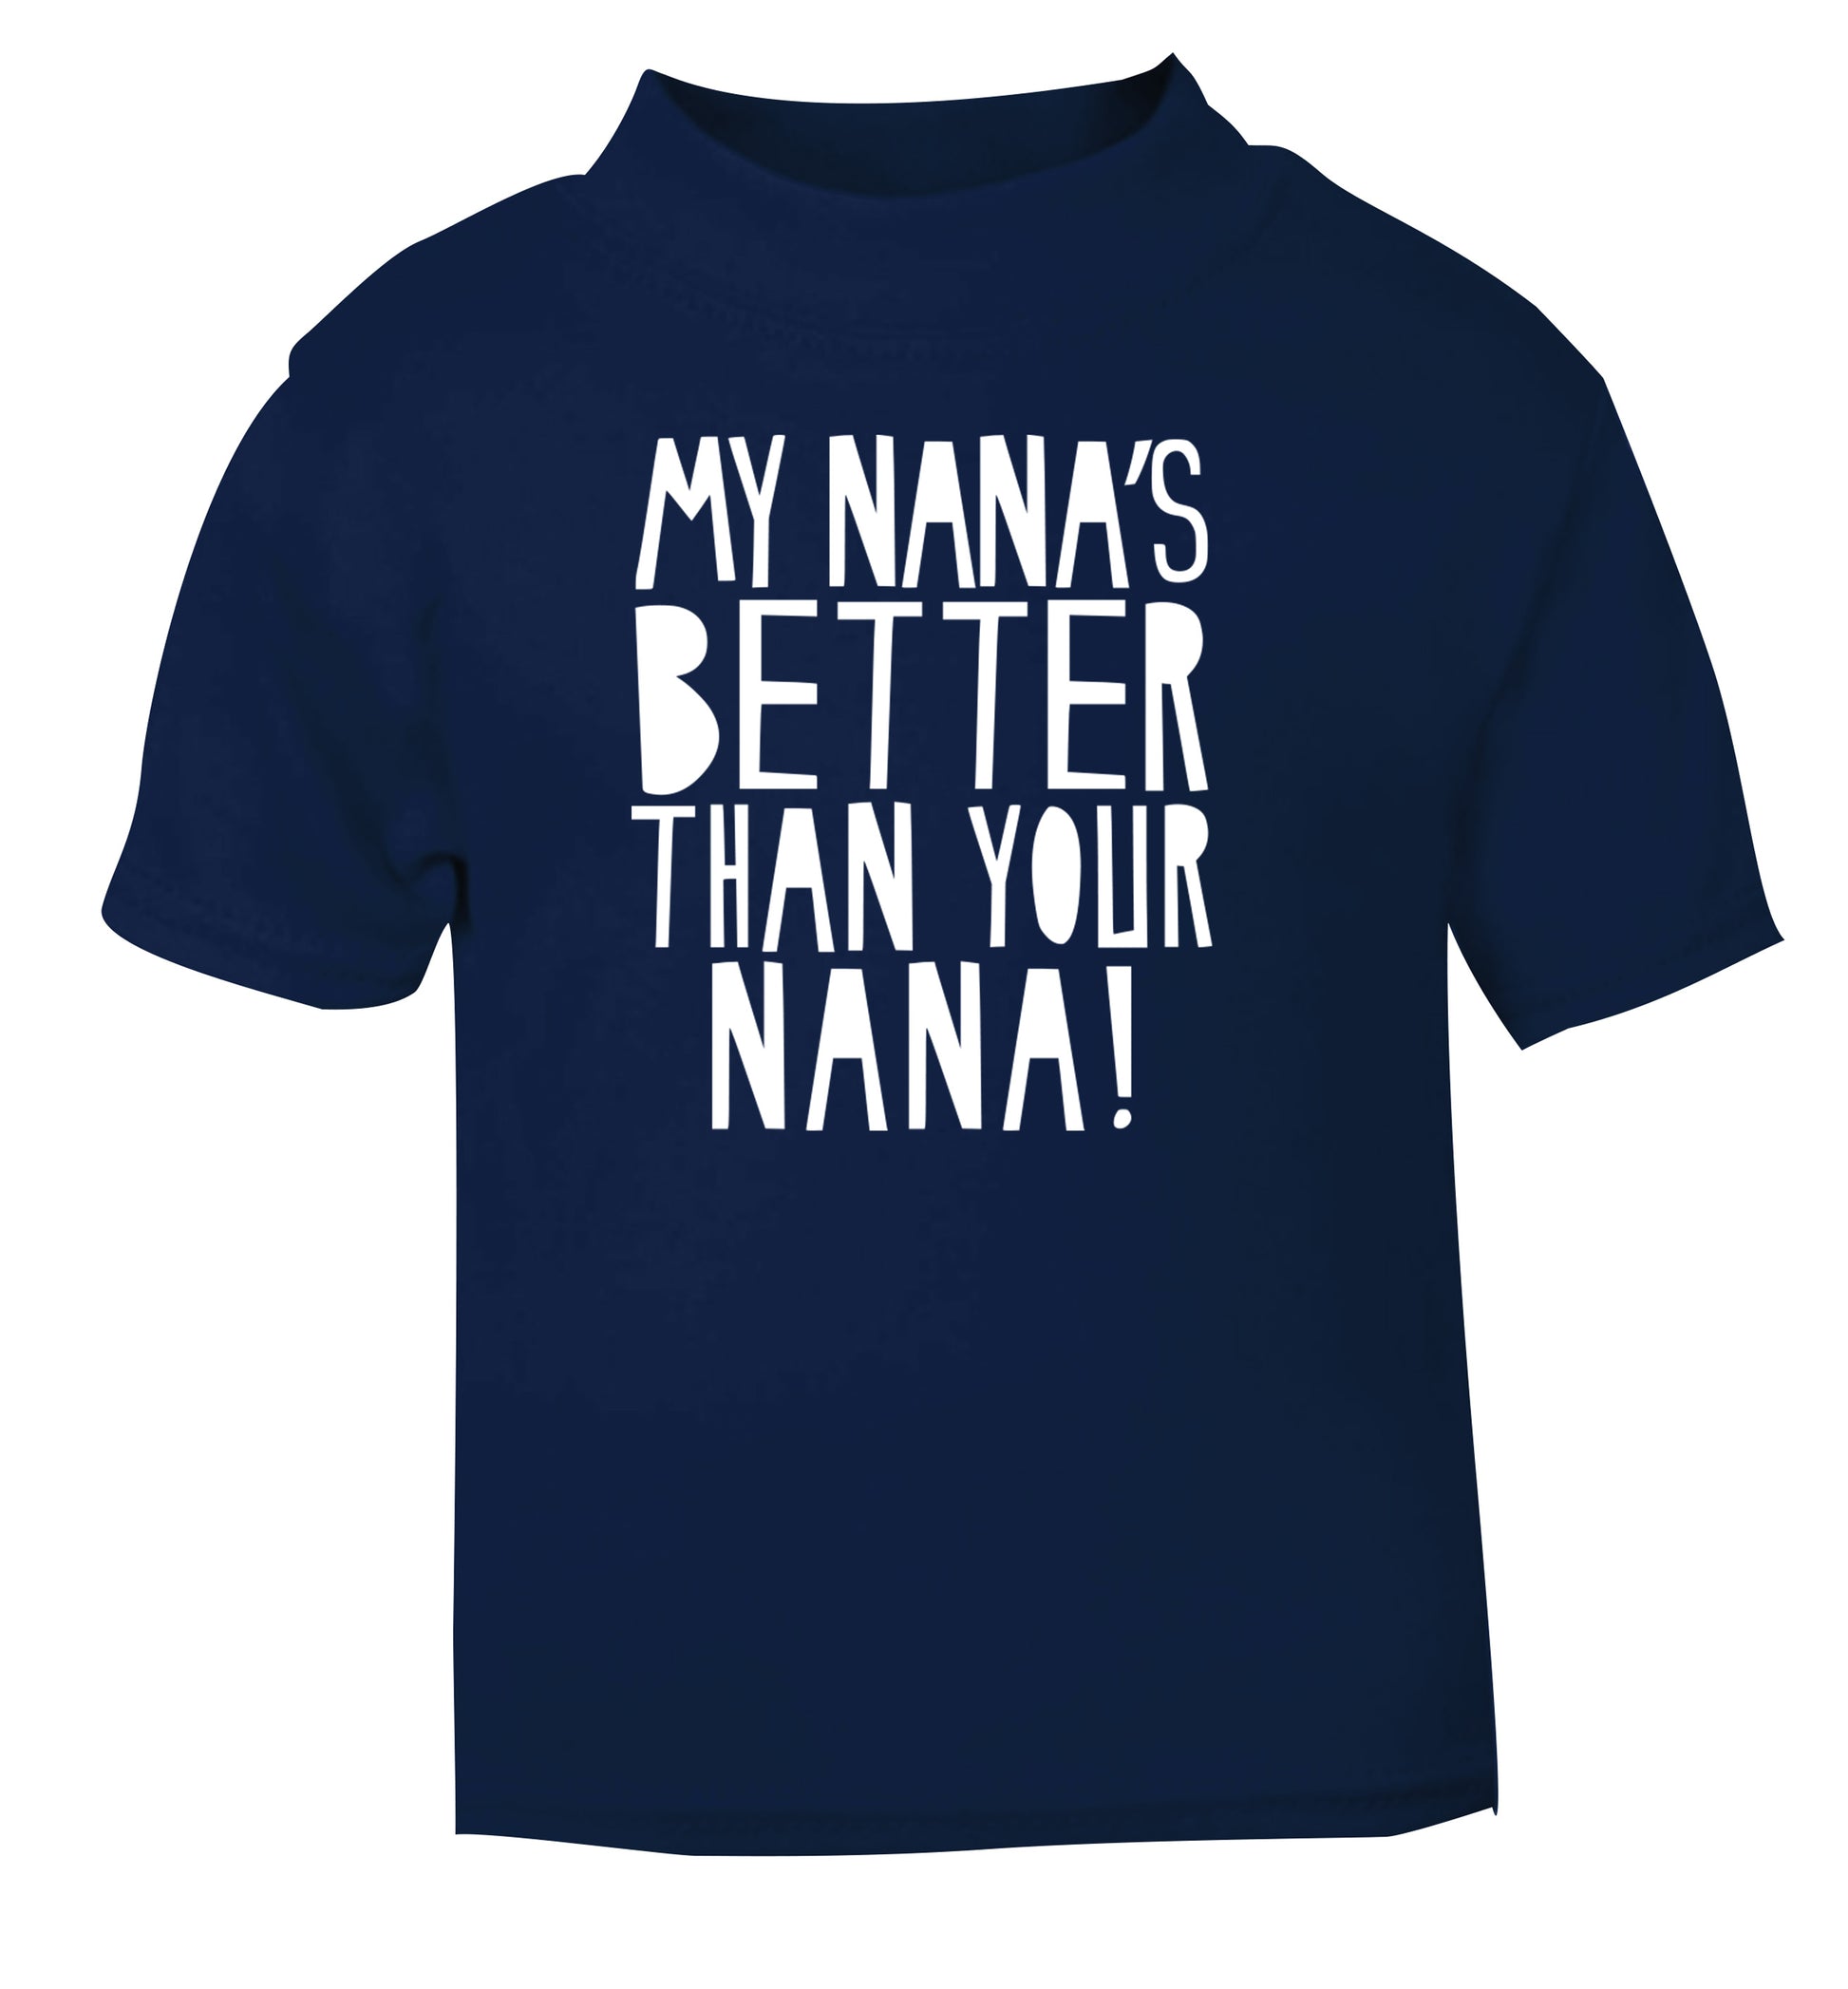 My nana's better than your nana navy Baby Toddler Tshirt 2 Years